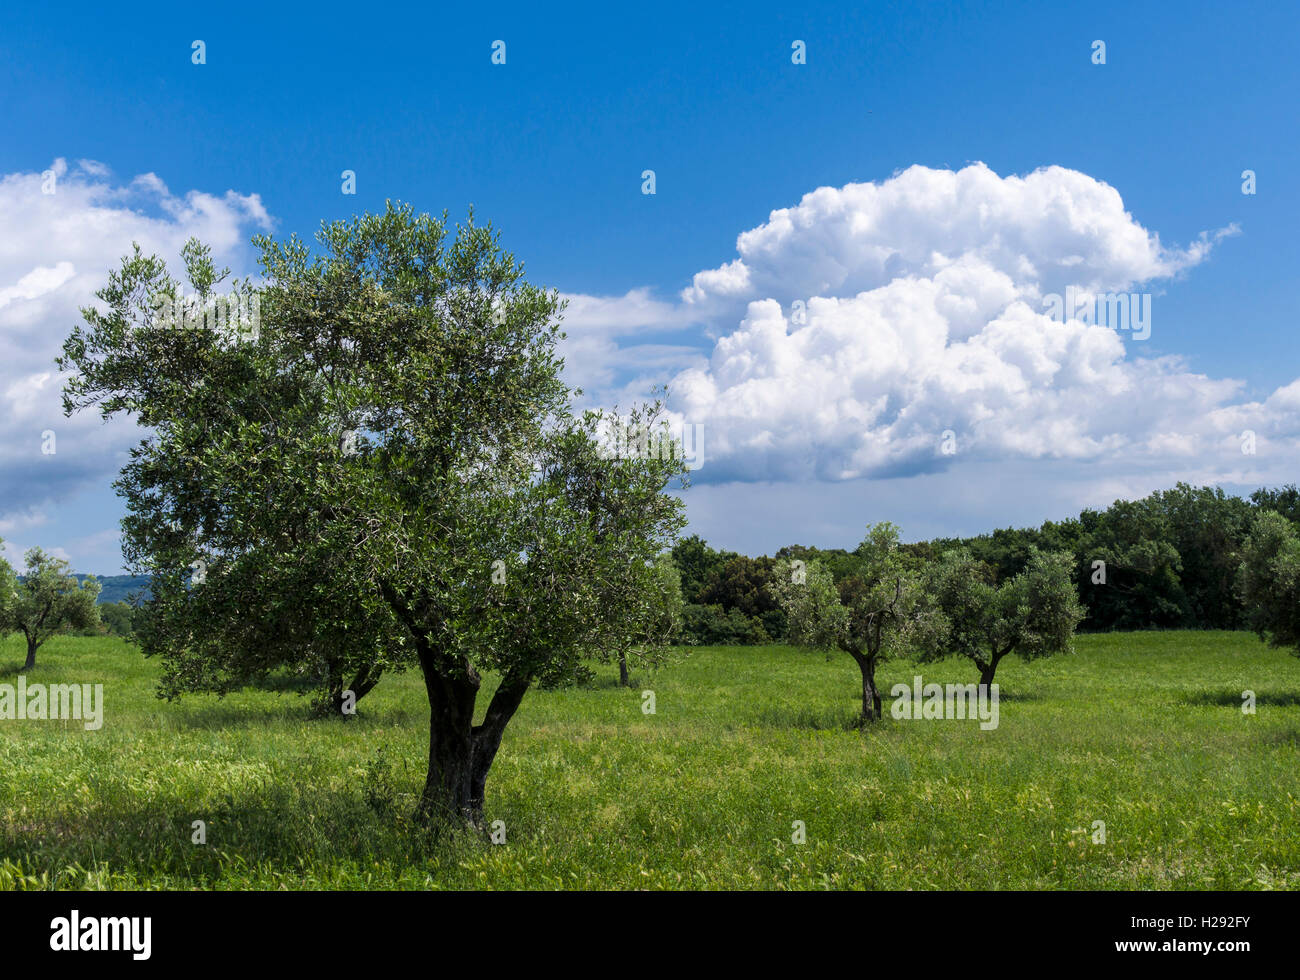 Olivenplantage, Bäume und Blau, bewölkter Himmel, Cassare, Toskana, Italien Stockfoto